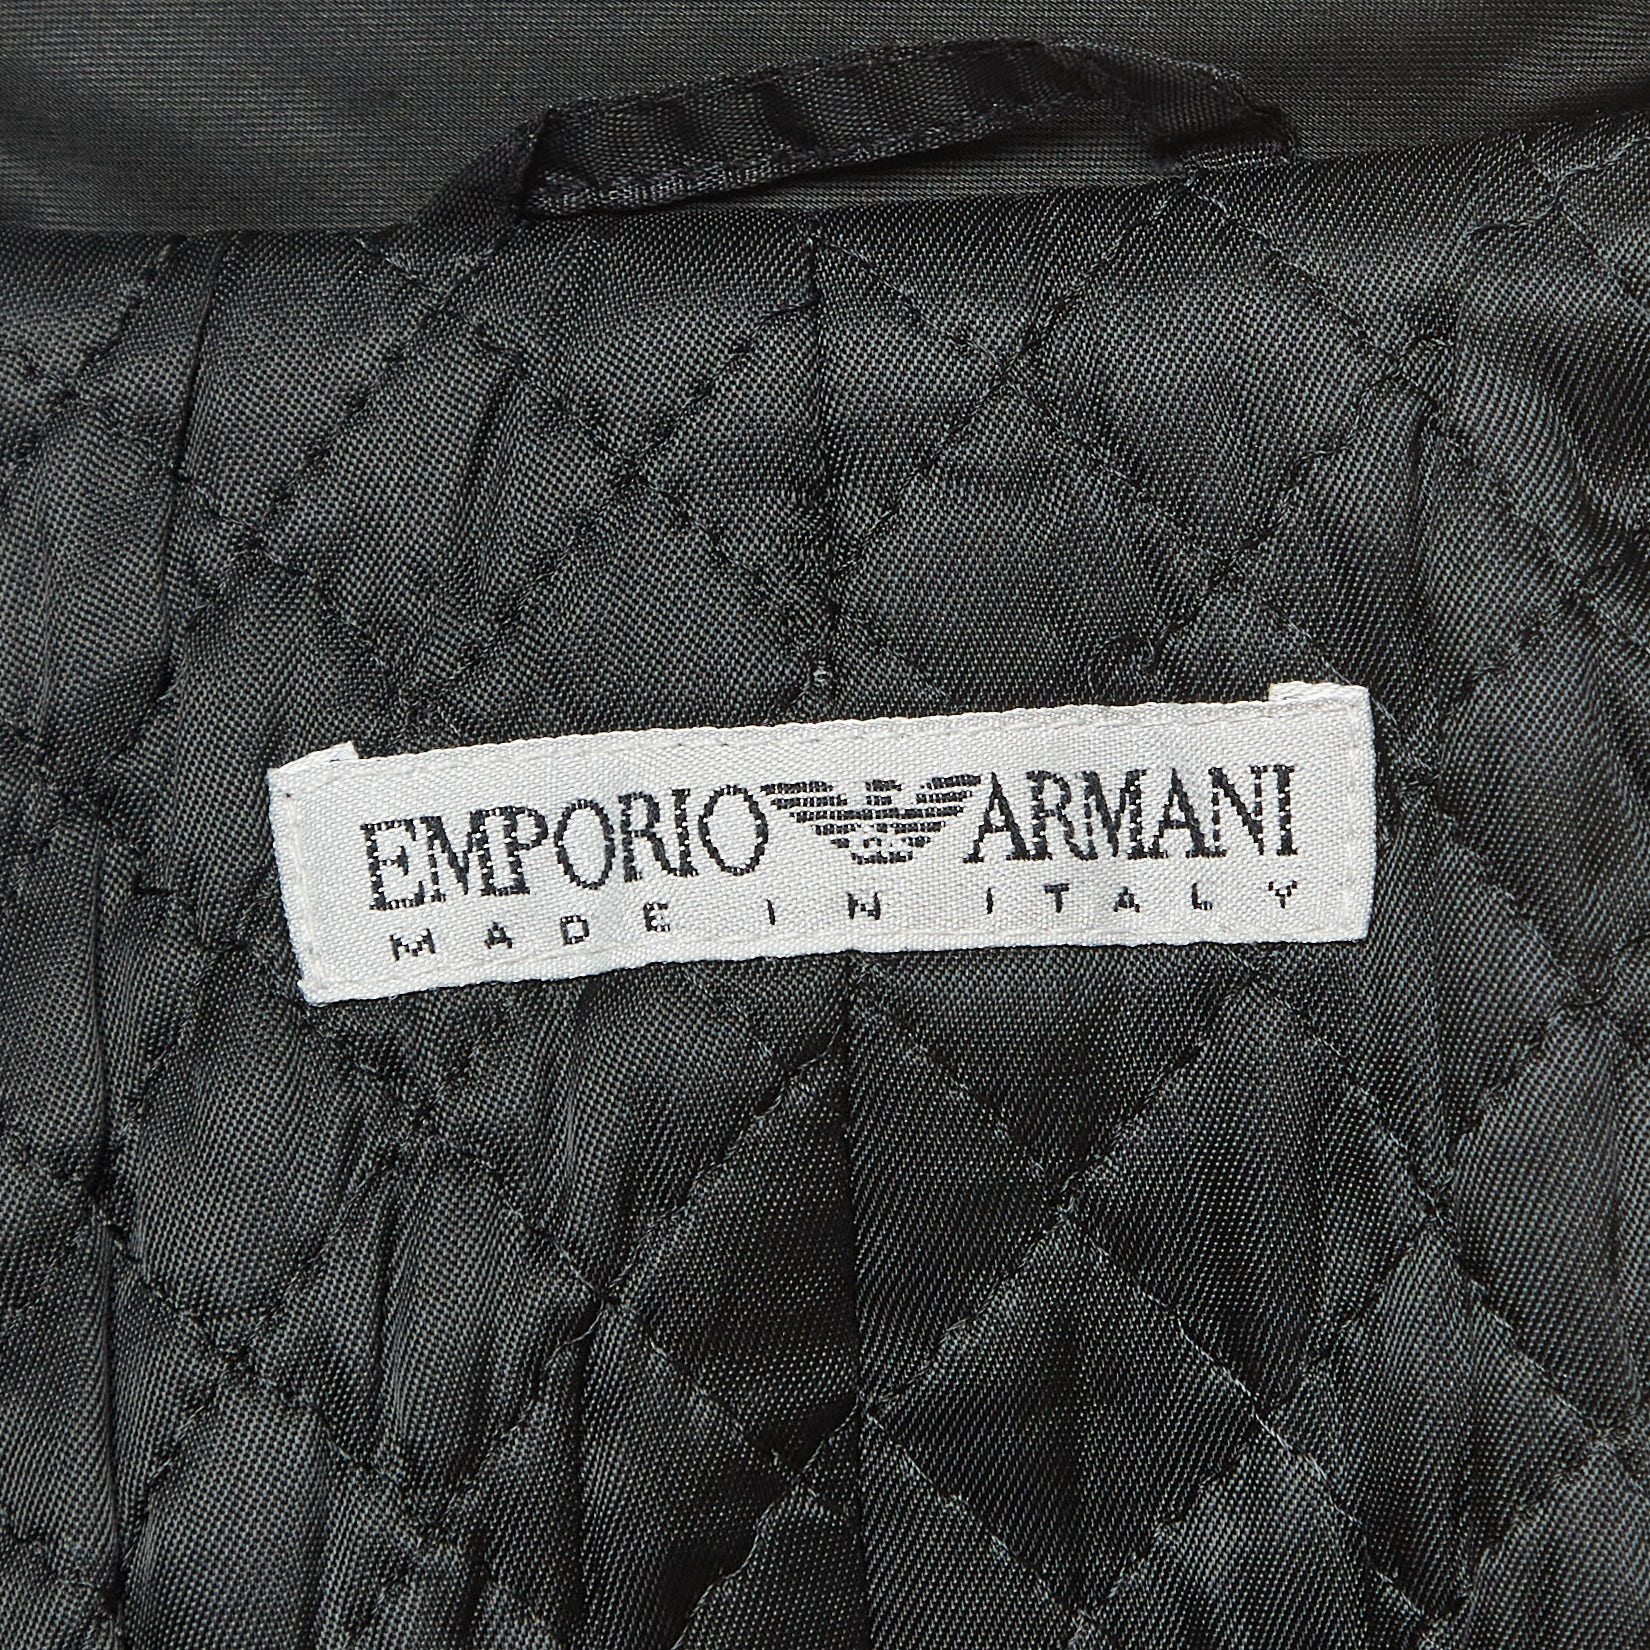 Emporio Armani Black Crepe Buttoned Jacket S